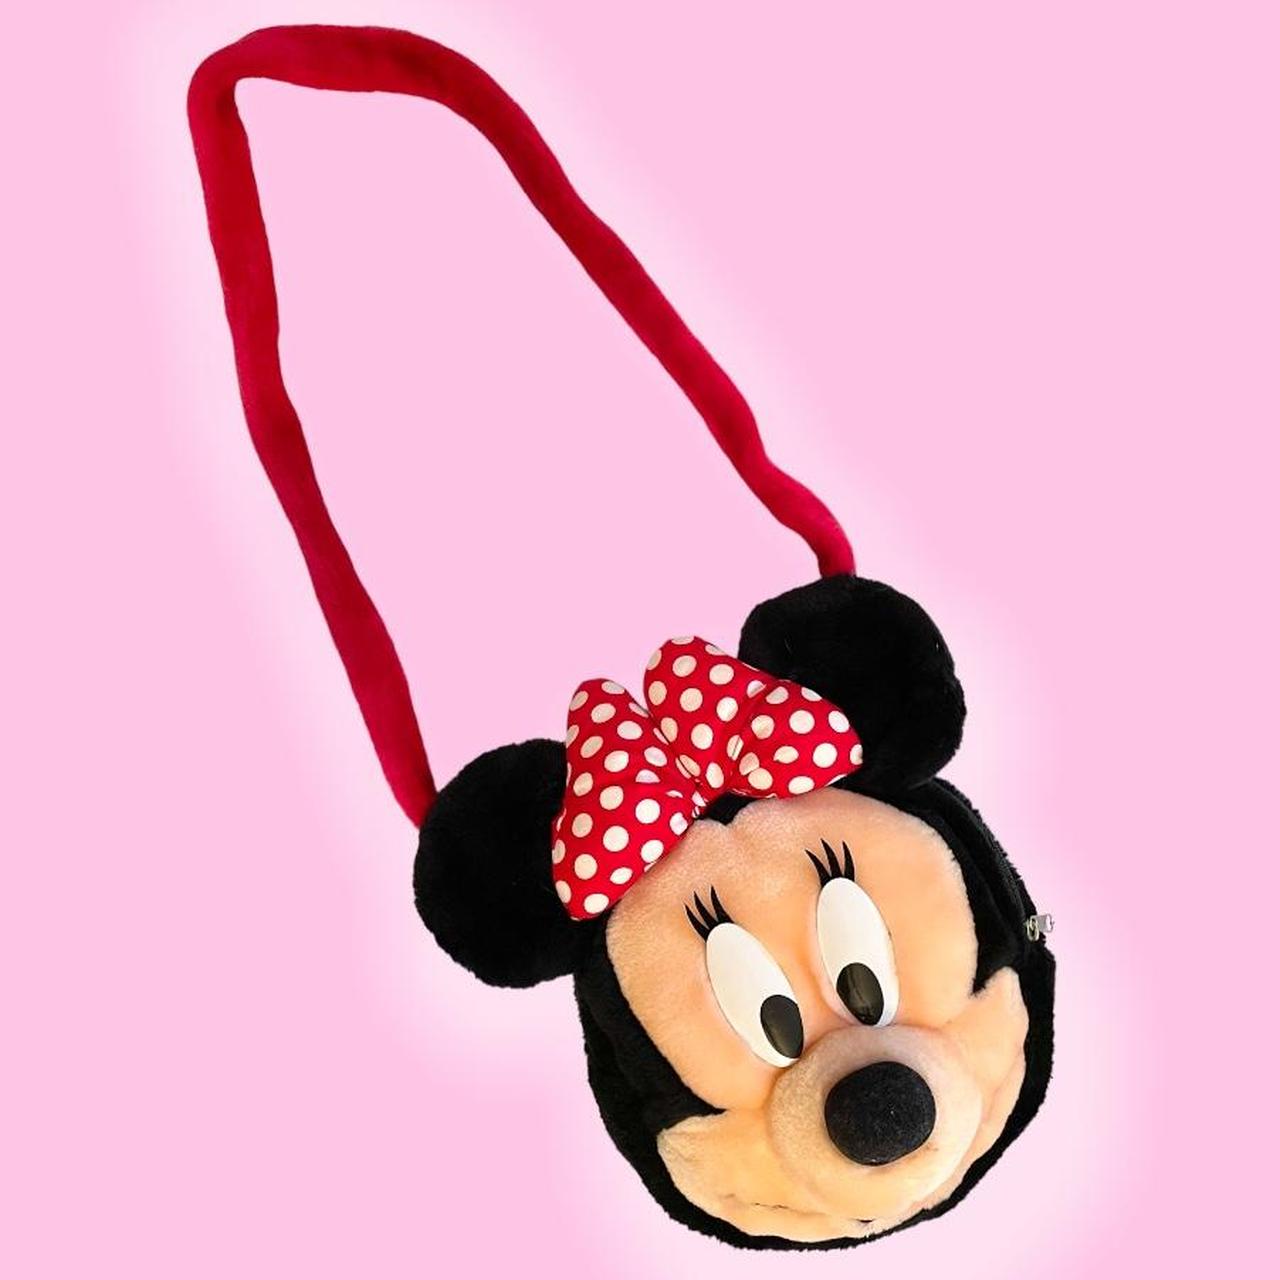 Adorable Minnie Mouse Purse for Girls - Aden | Aden.com.cy